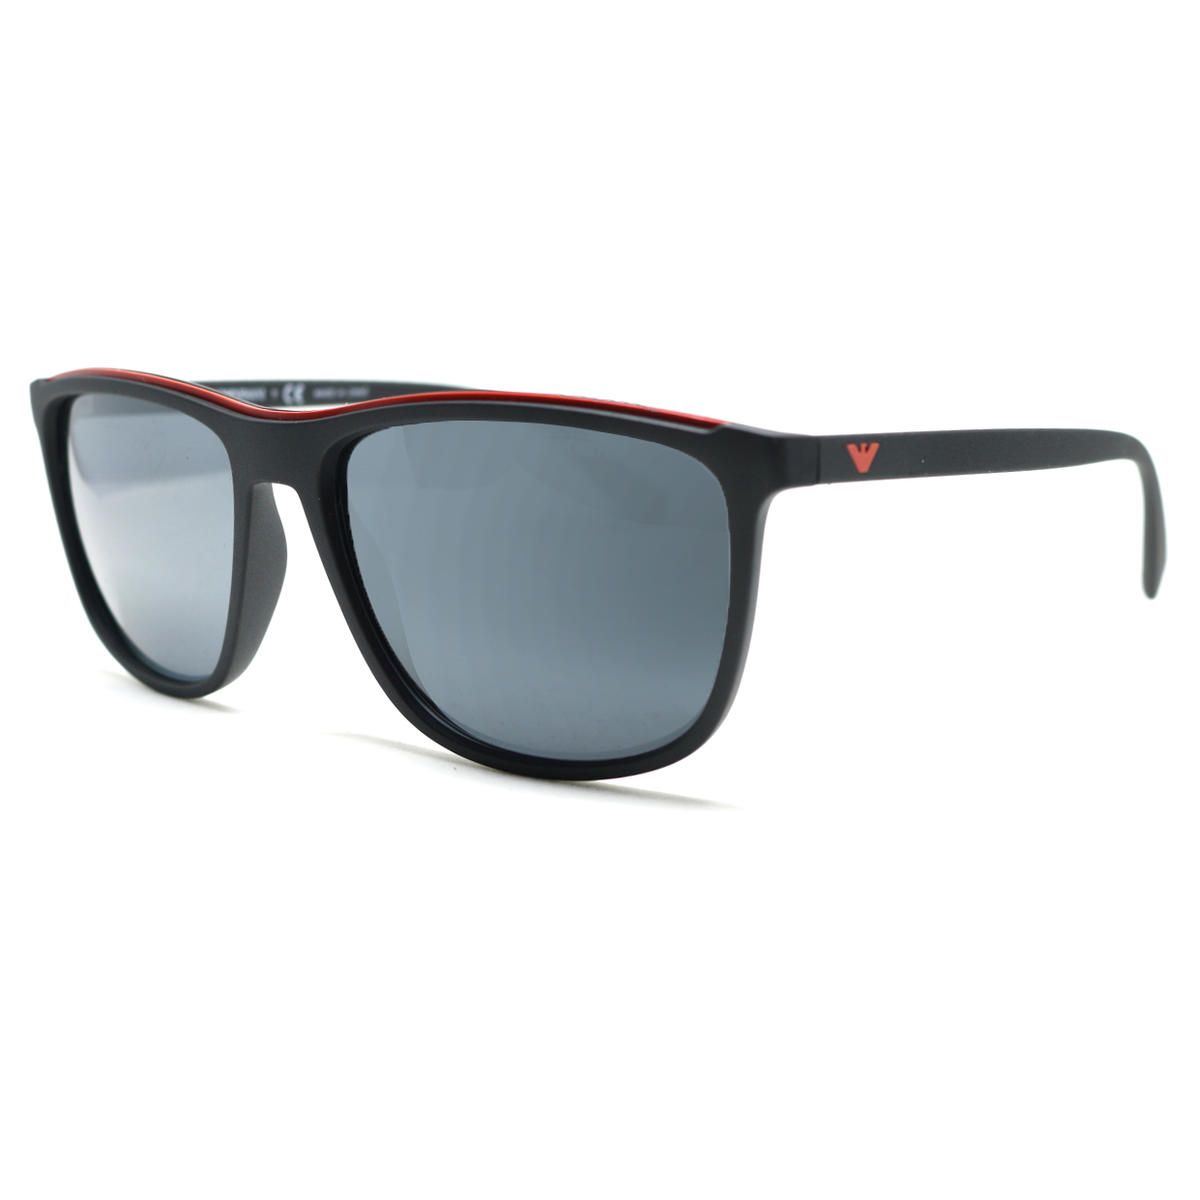 Buy Emporio Armani EA4109 5042G Black Unisex Sunglasses Online in UAE |  Sharaf DG